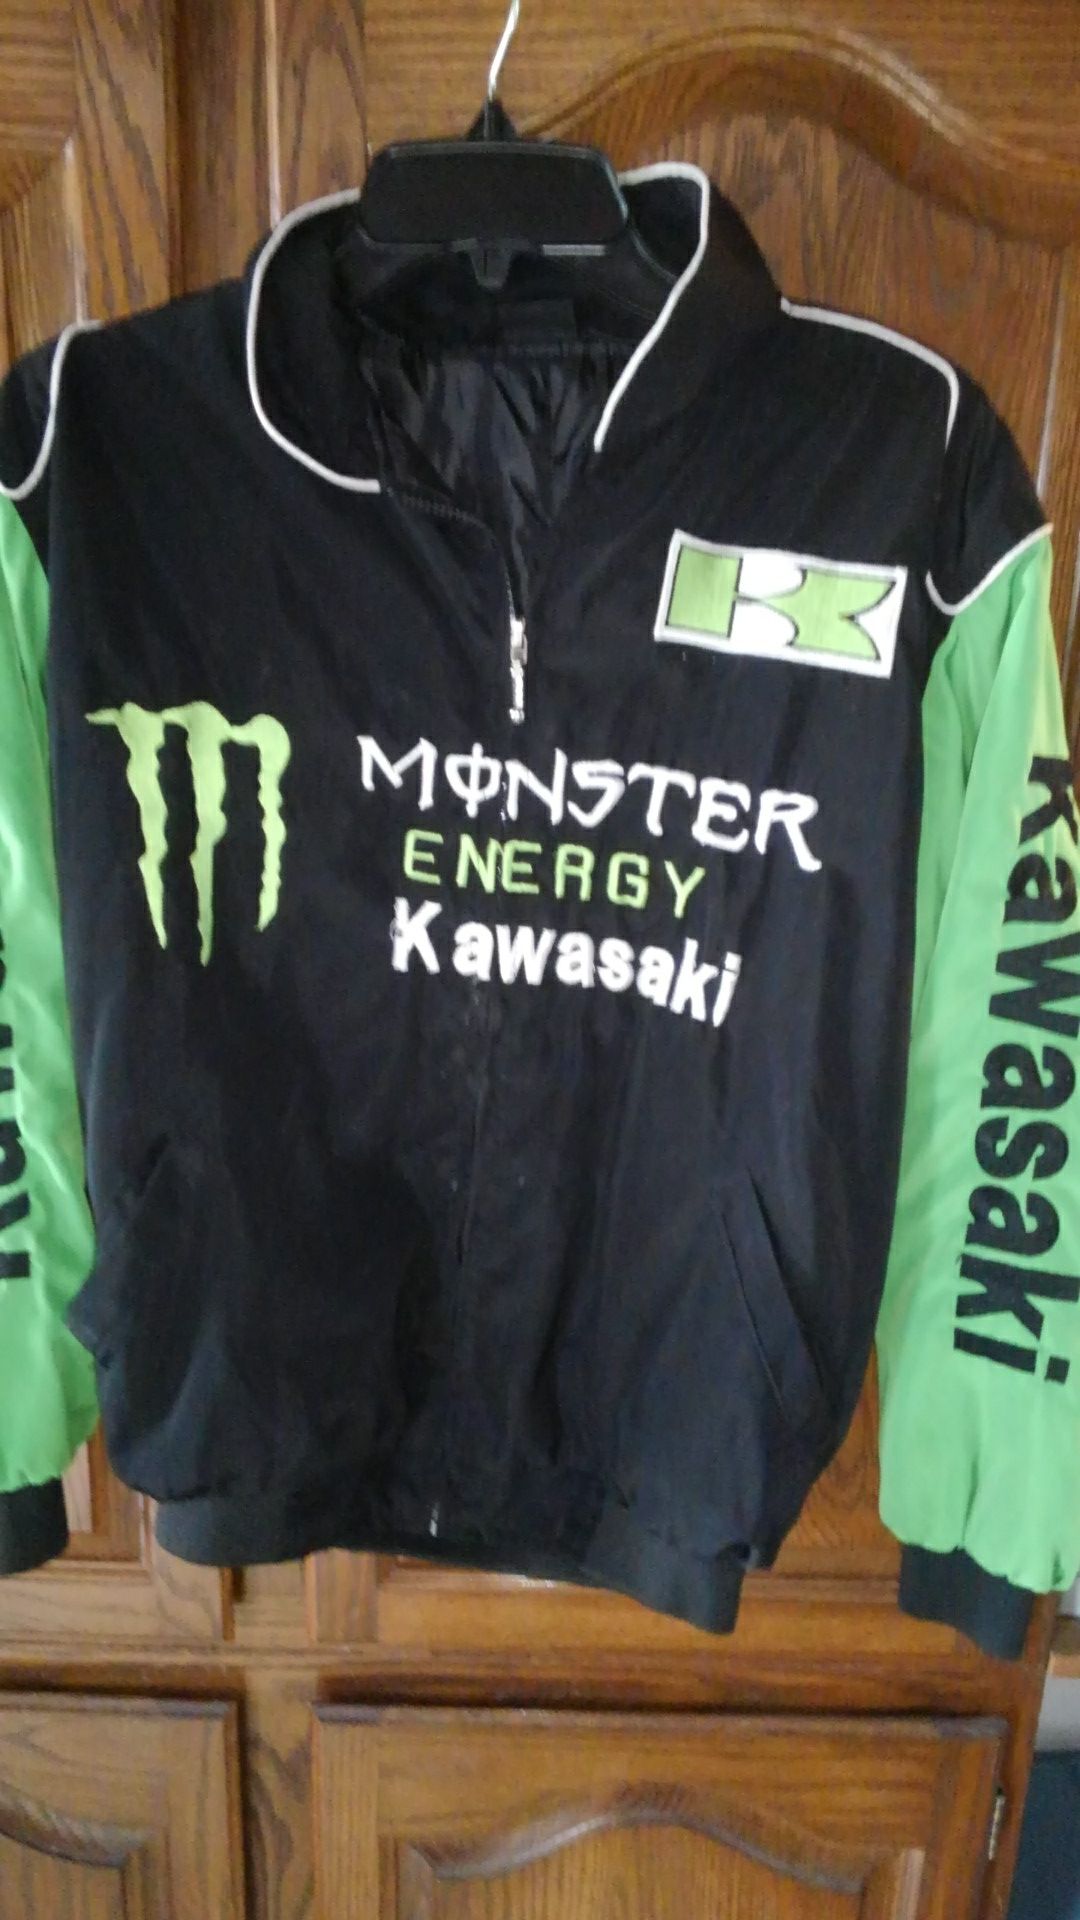 Kawasaki jacket, kids